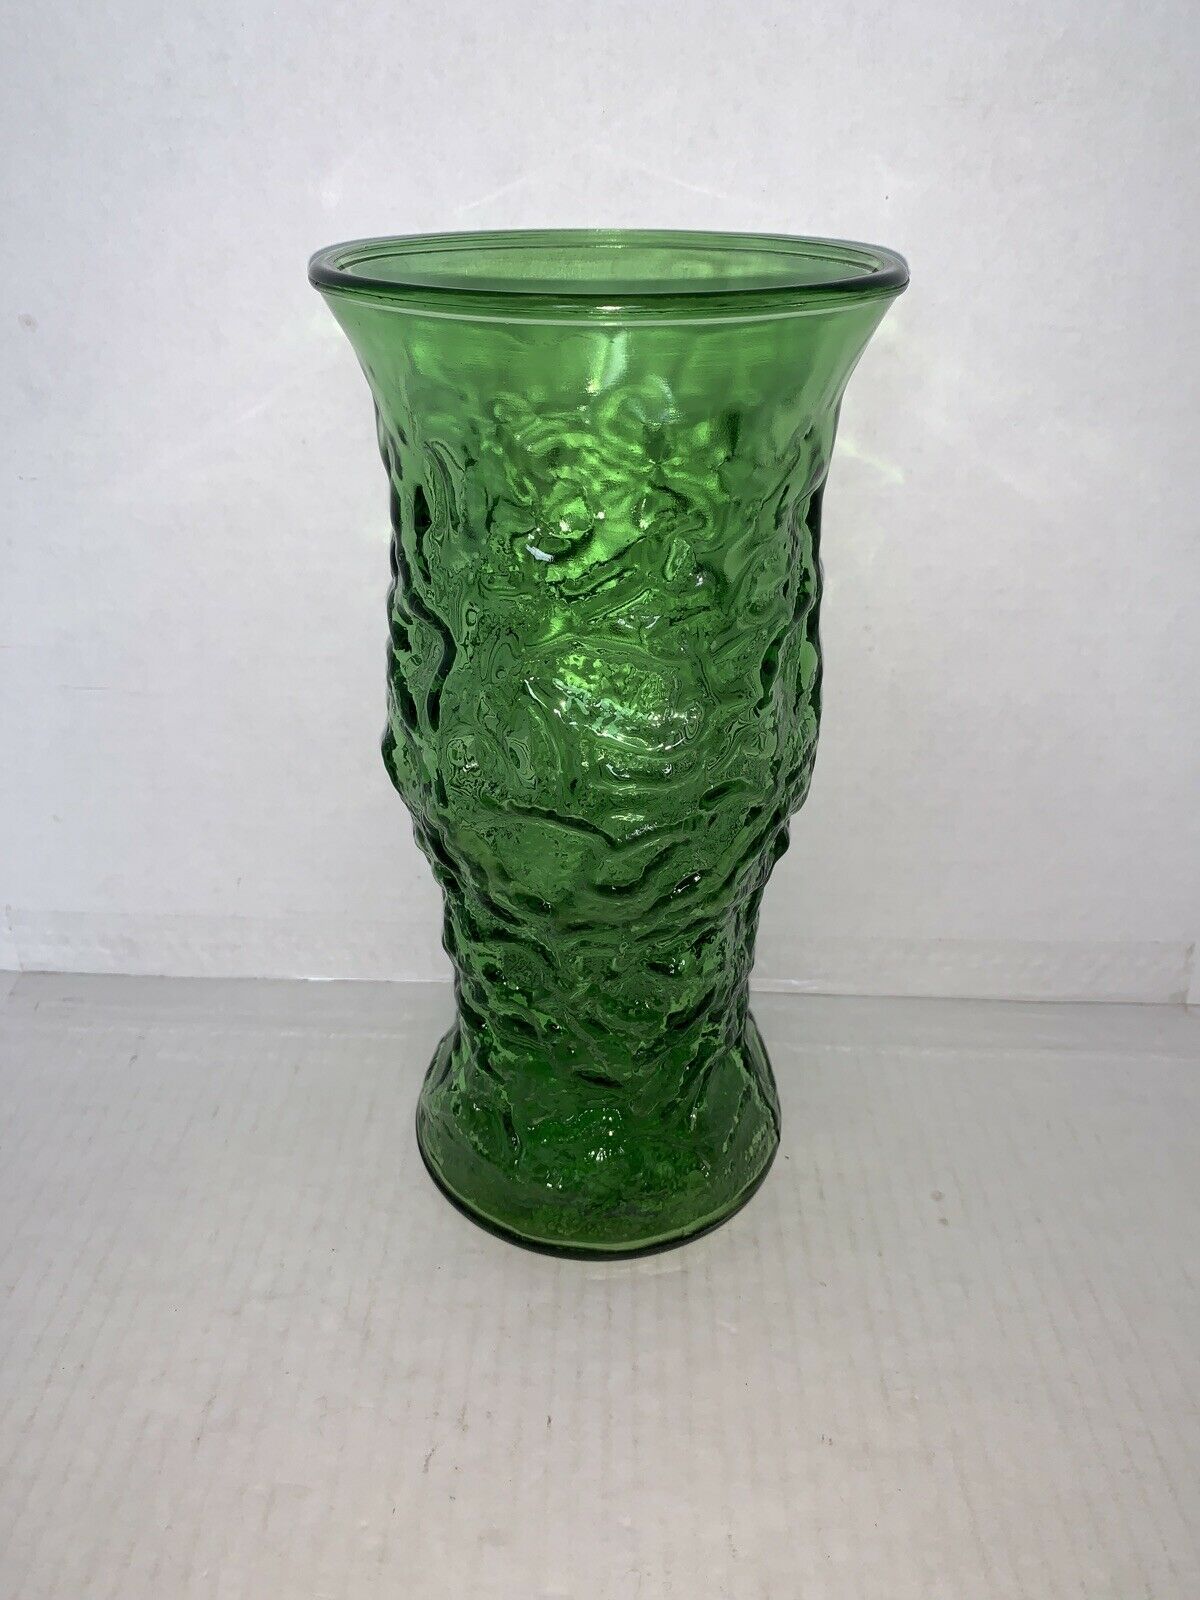 Collectible Glass Art Collectibles Vintage Hoosier Emerald Green Textured Glass Vase No Etna